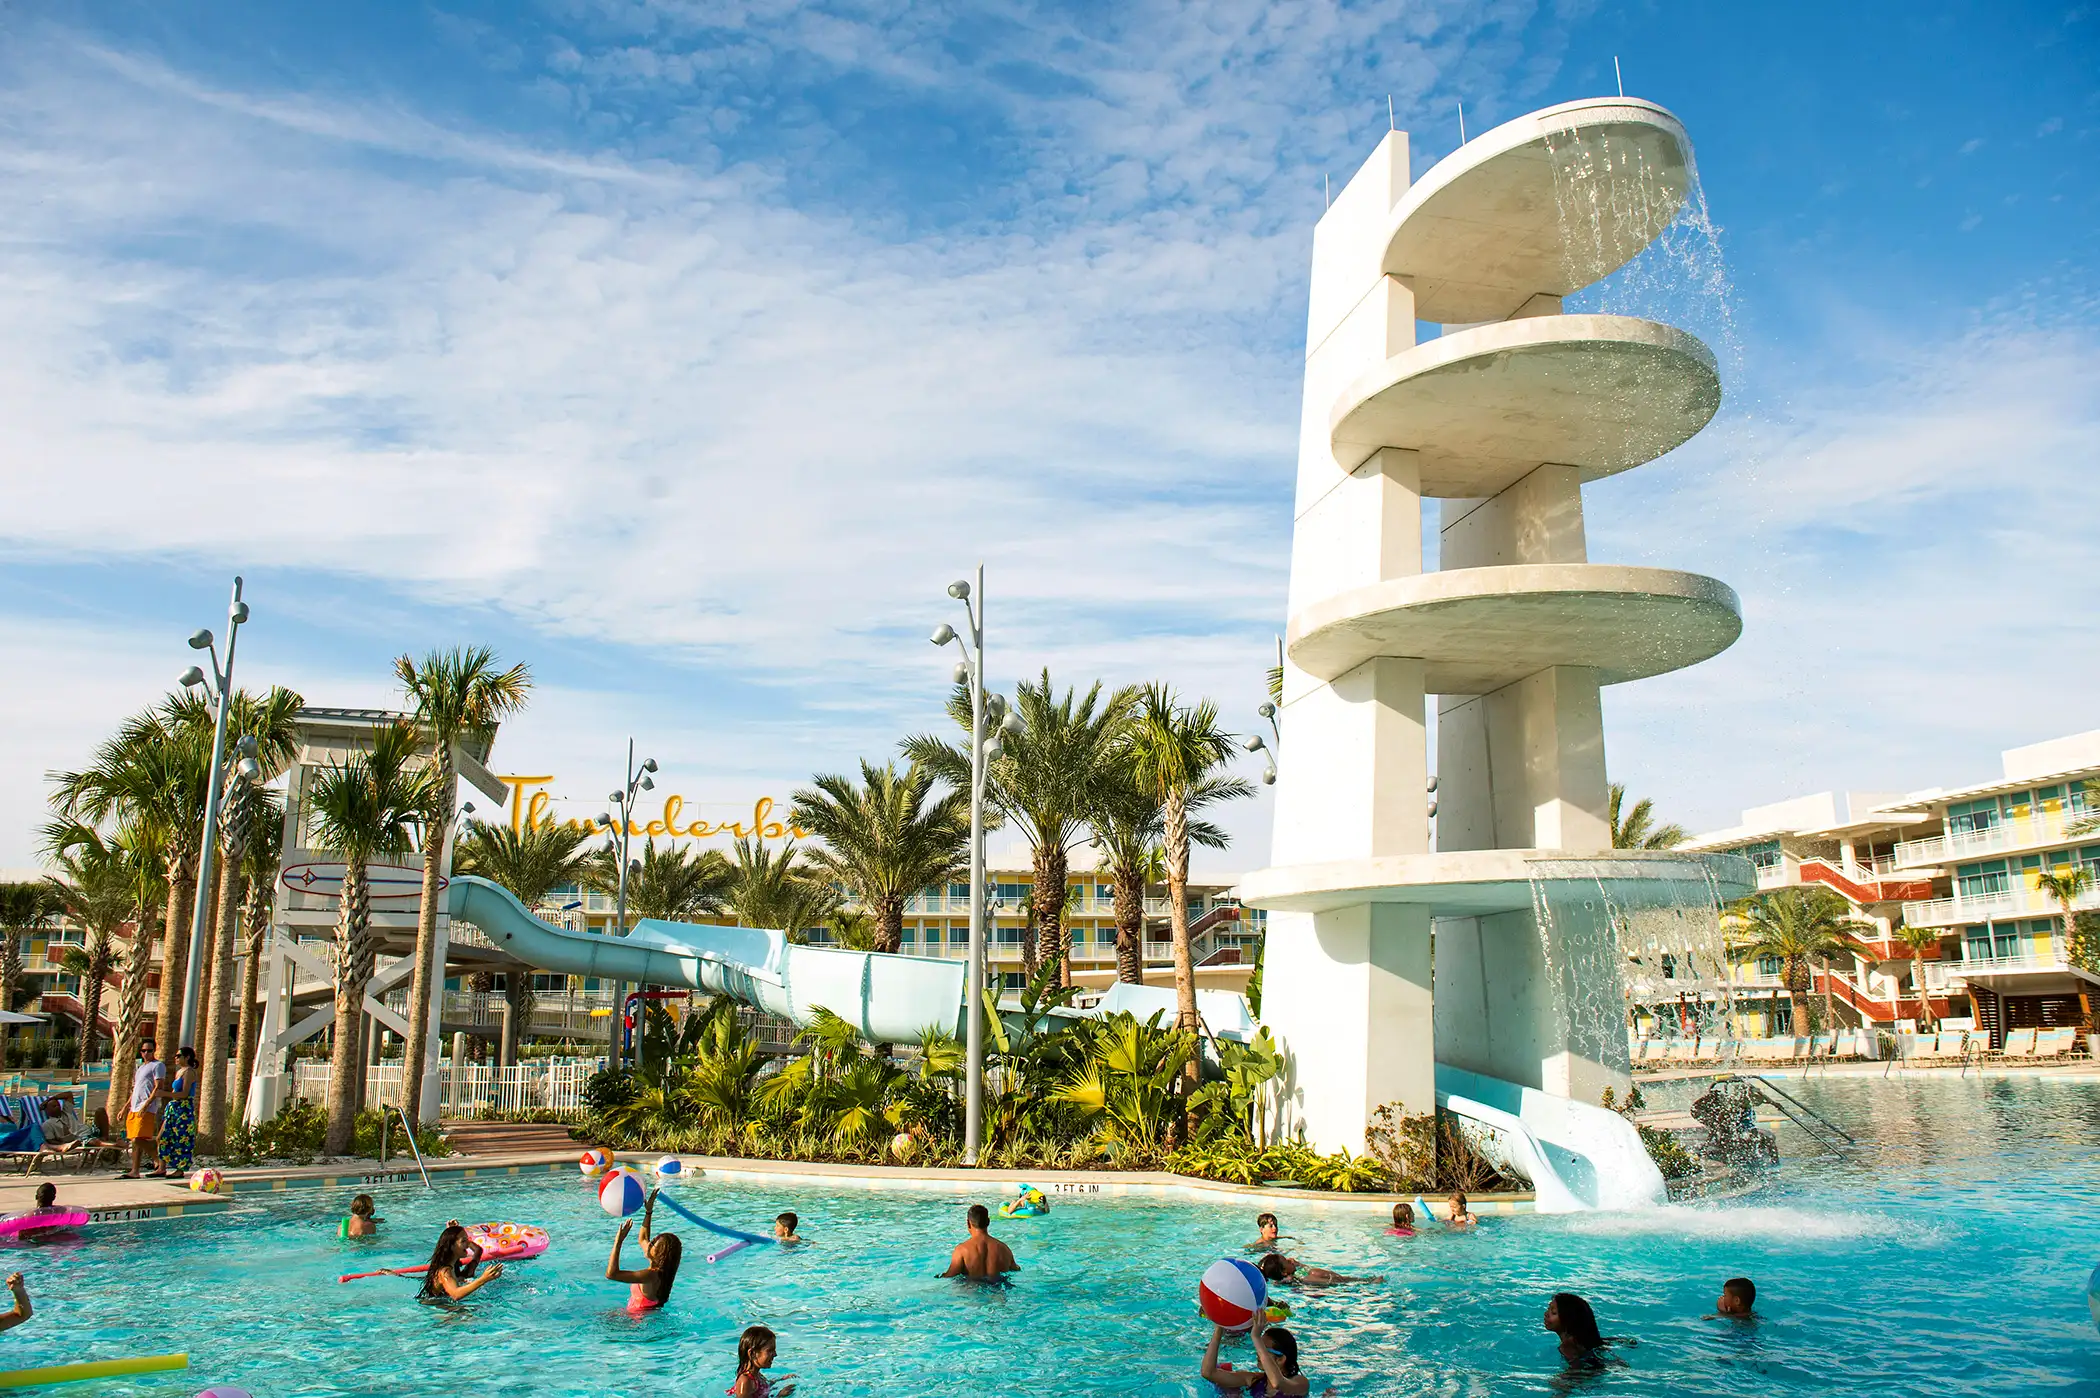 Universal Orlando’s fourth on-site hotel, Universal’s Cabana Bay Beach Resort